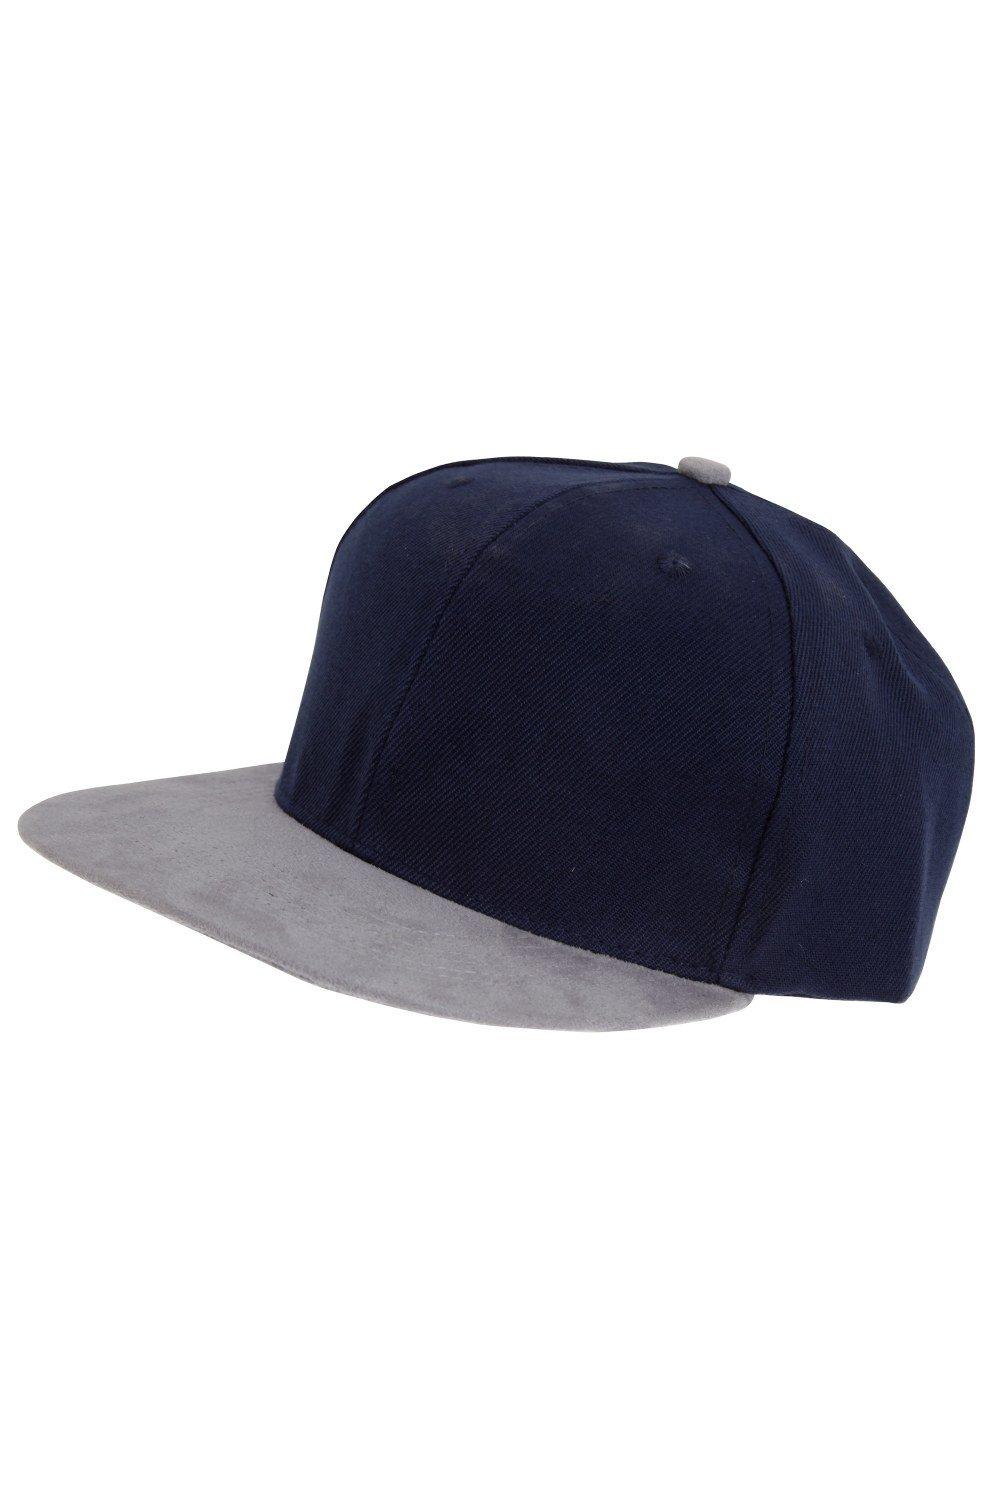 цена Бейсбольная кепка Snapback Tom Franks, темно-синий